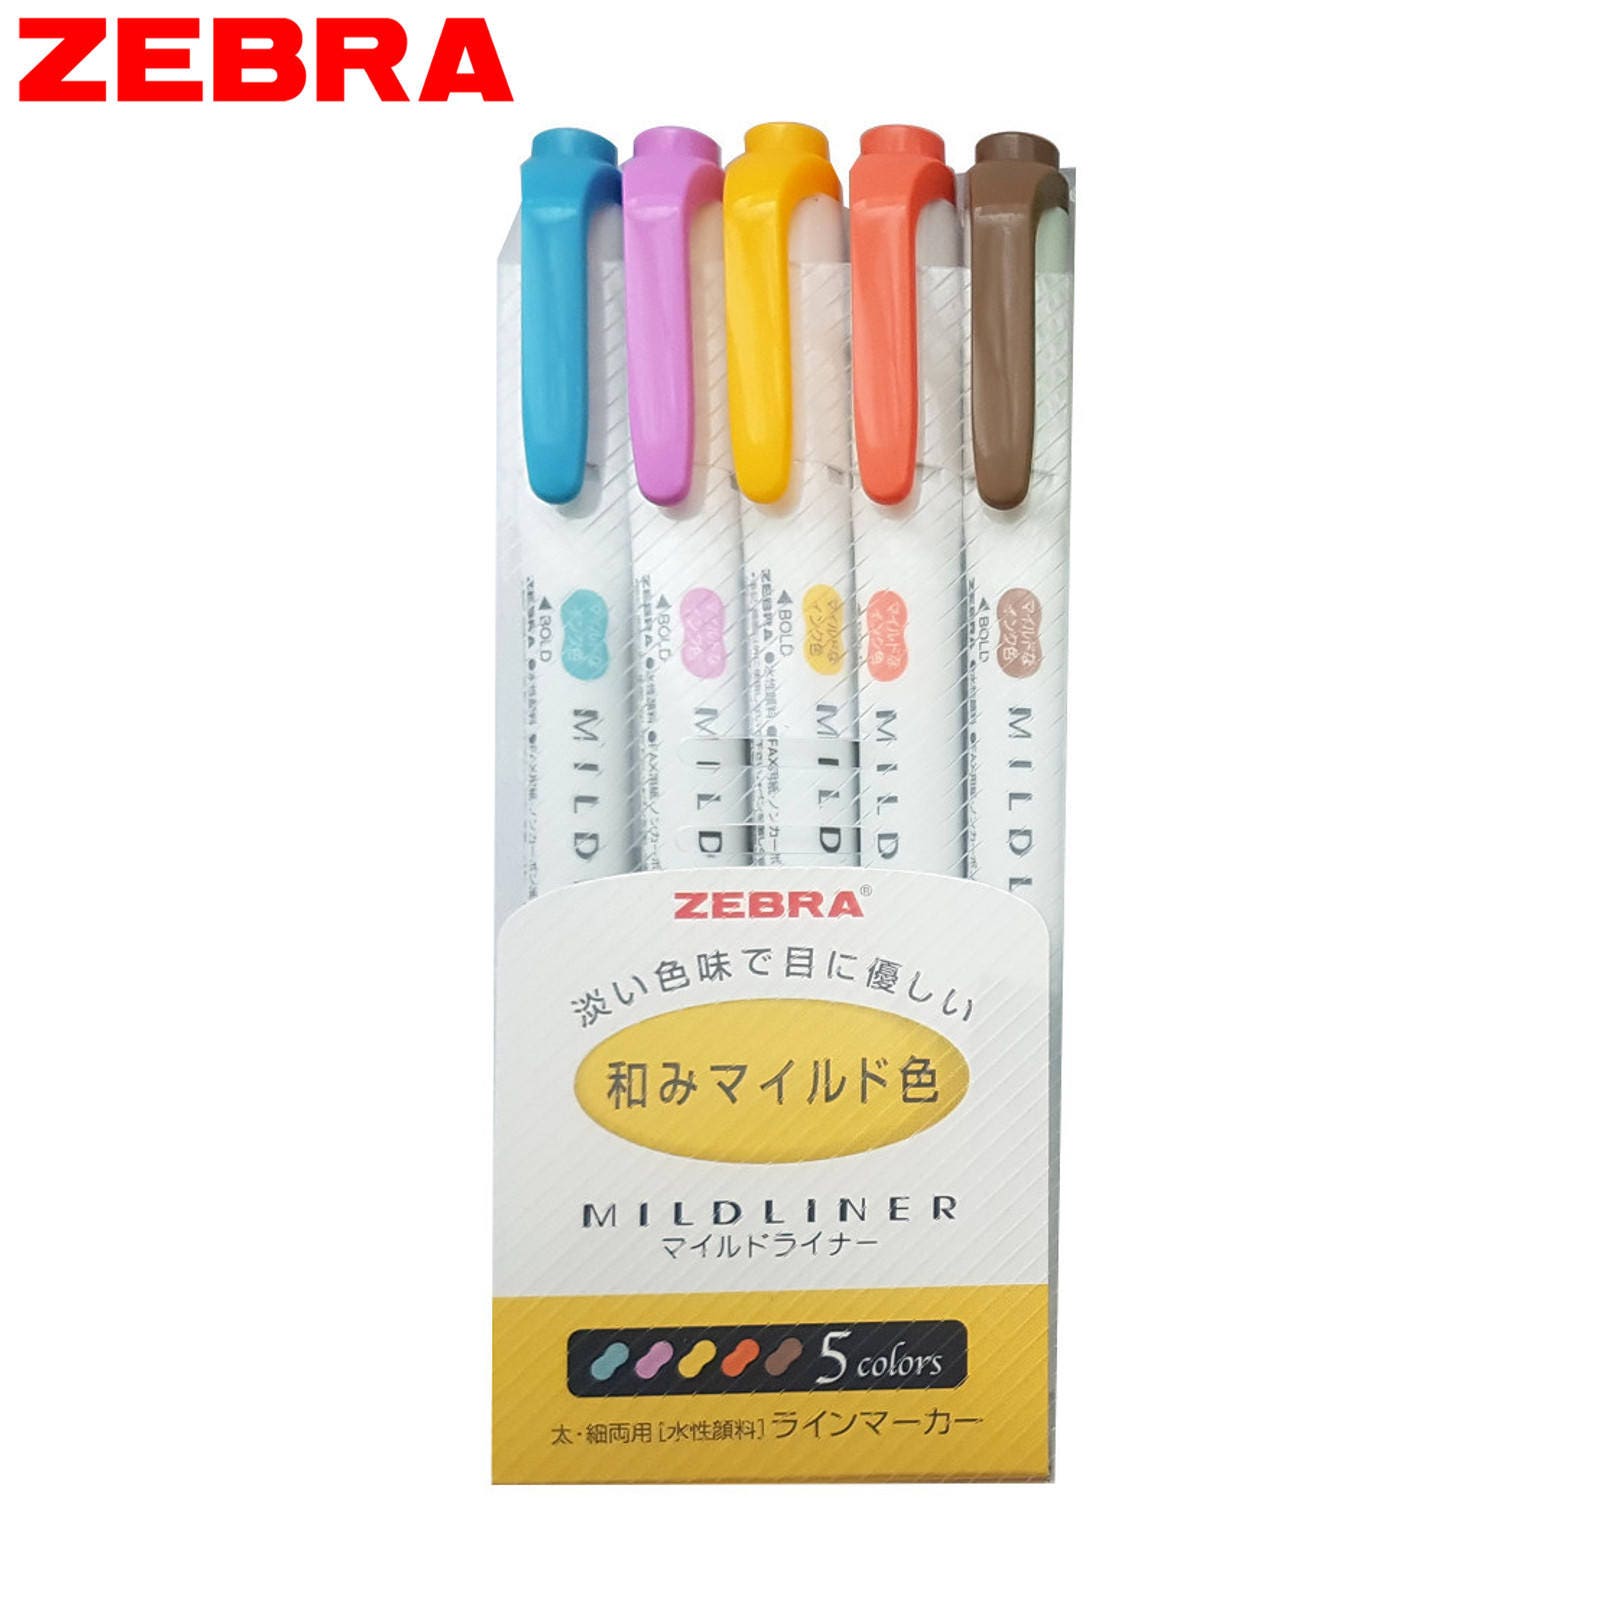 ZEBRA Journaling Set, Mildliner/Sarasa Combo 14 Pack